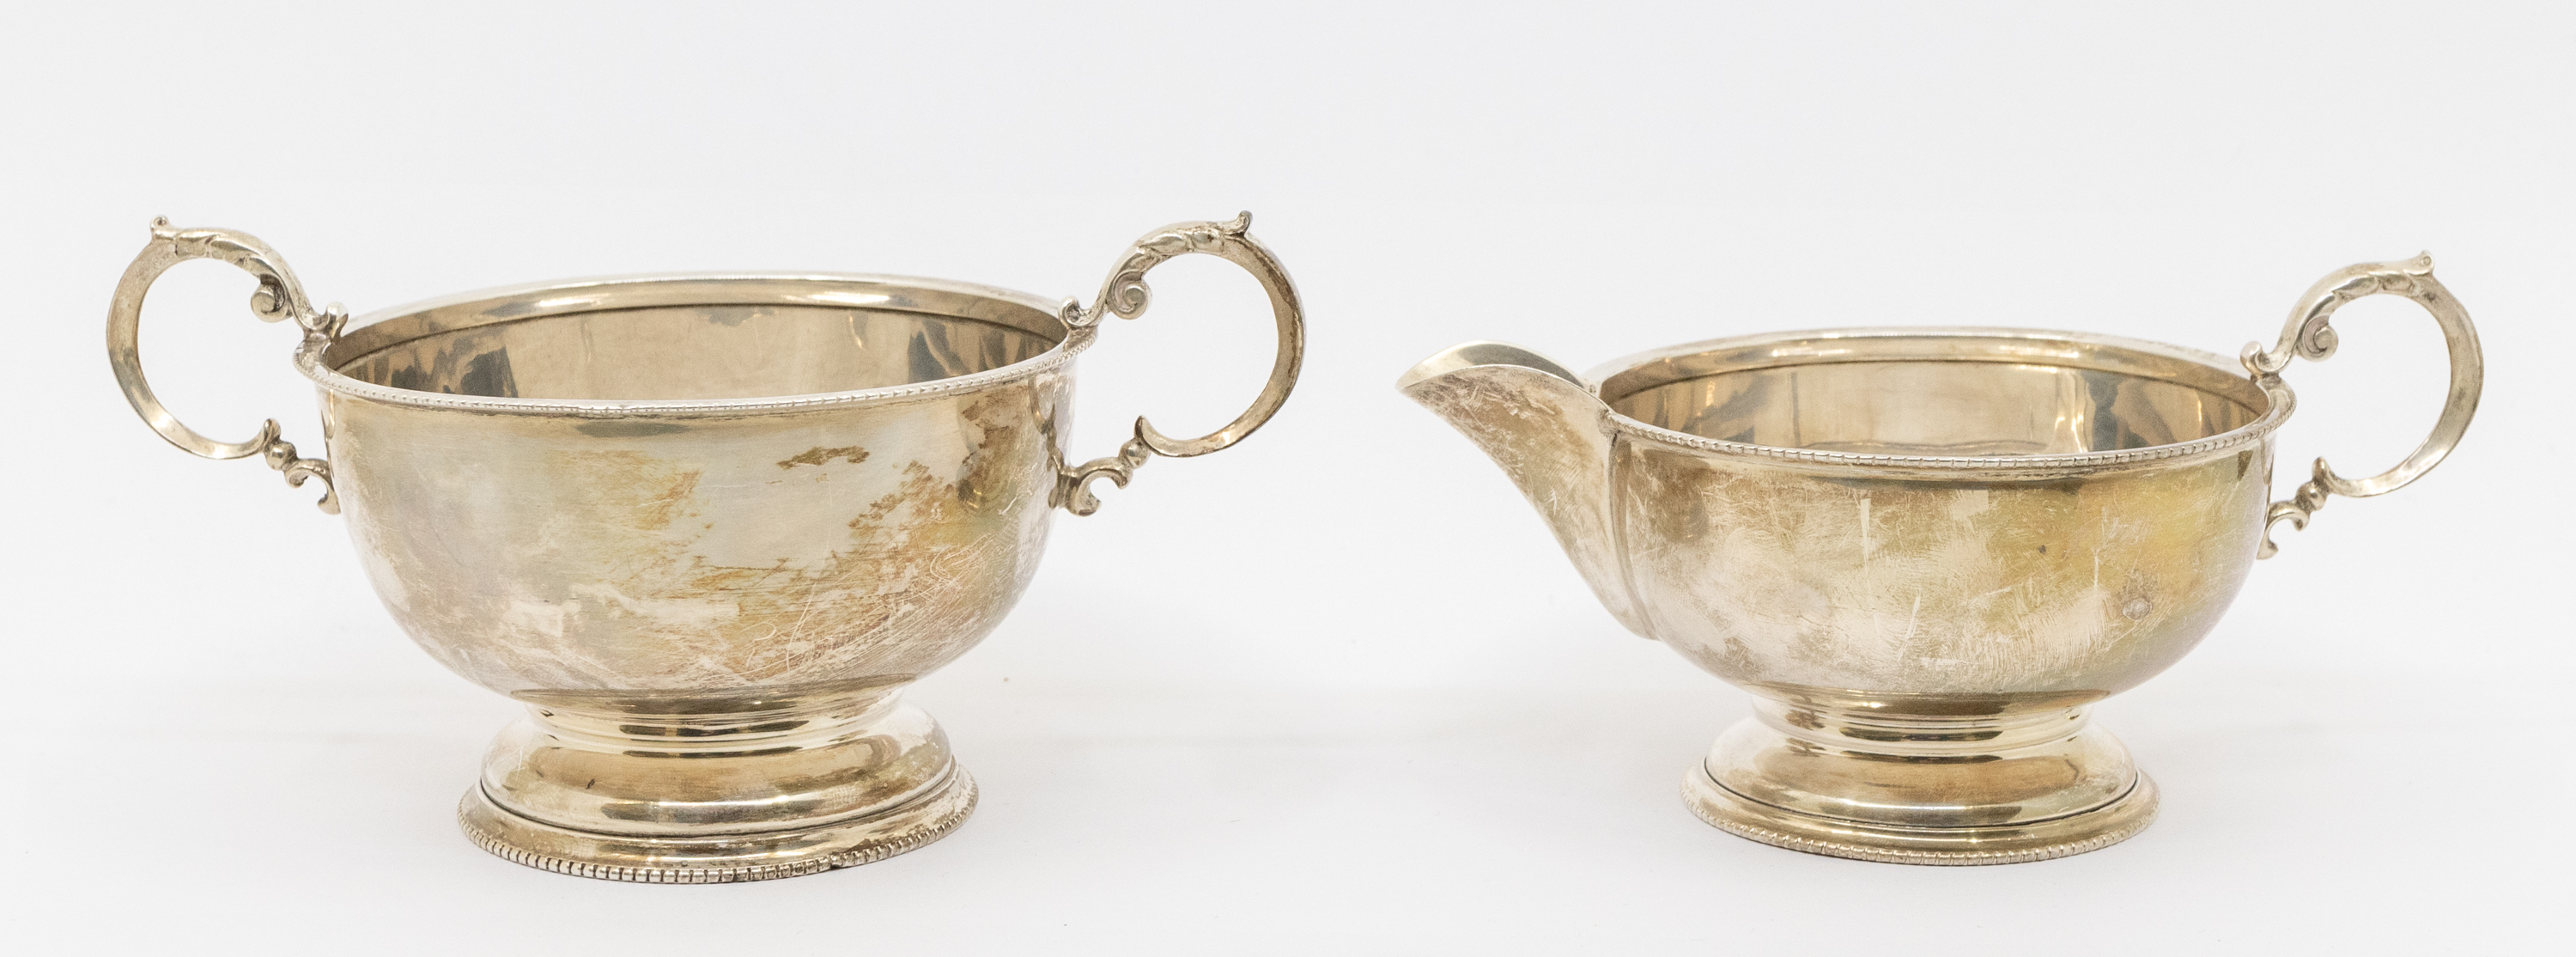 A matching George V silver milk jug and sugar bowl, both with beaded edging and circular footed